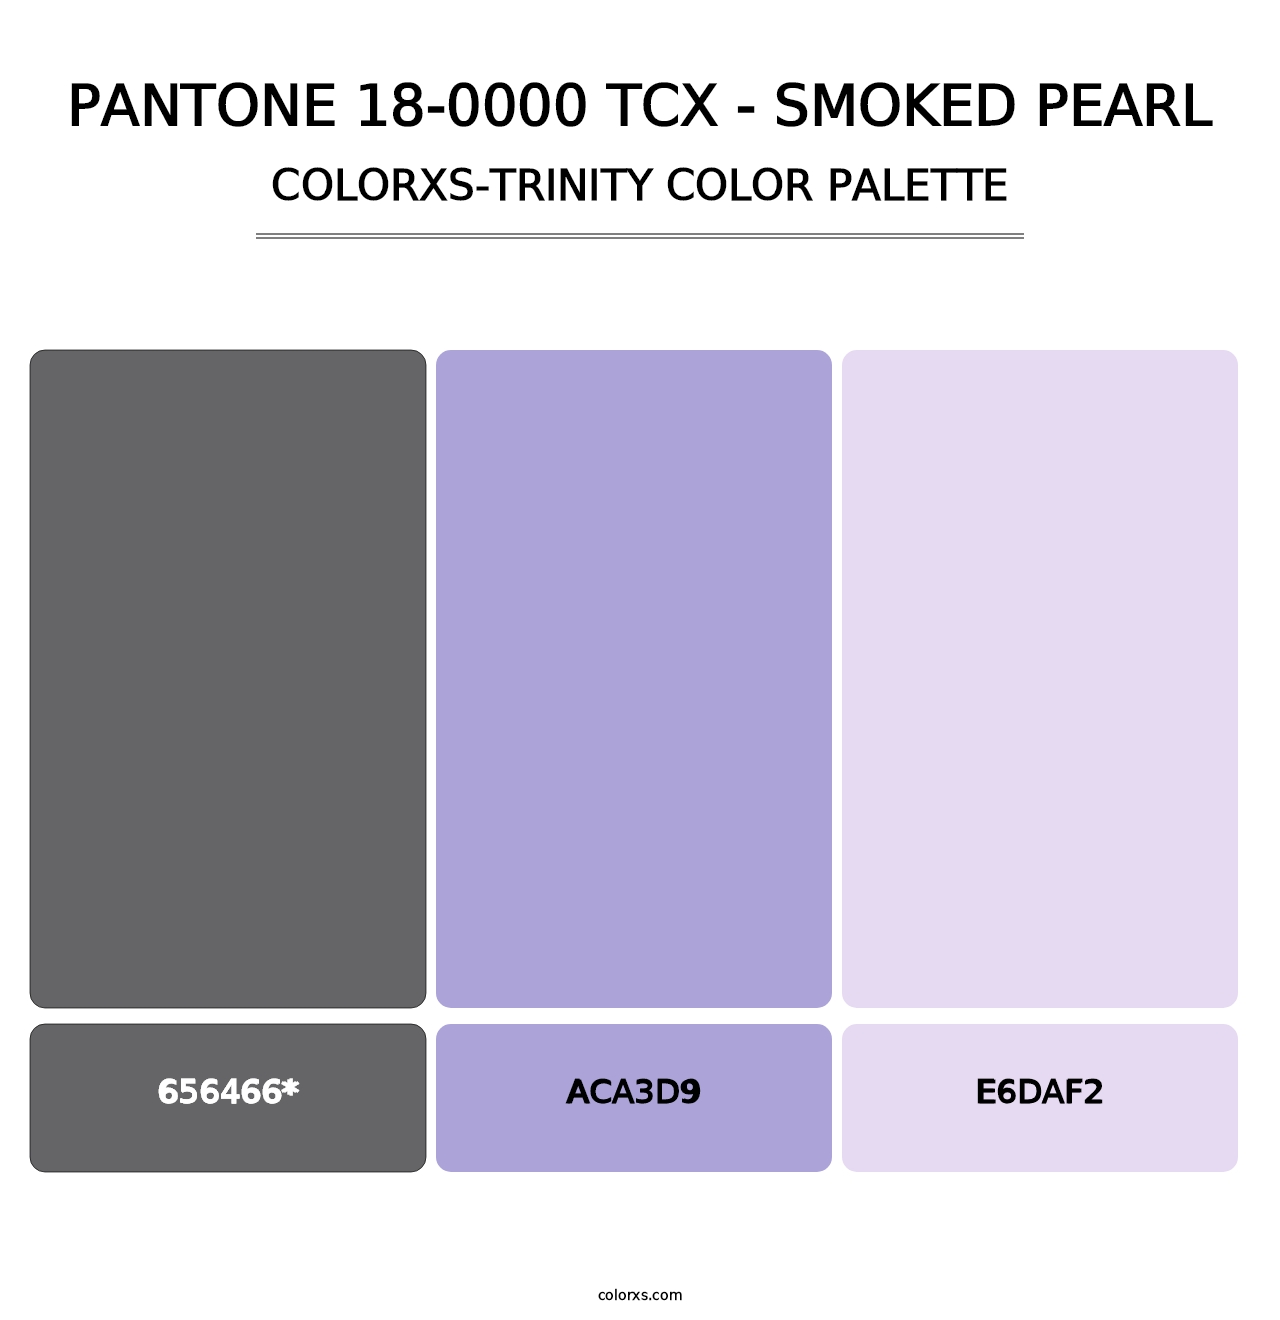 PANTONE 18-0000 TCX - Smoked Pearl - Colorxs Trinity Palette